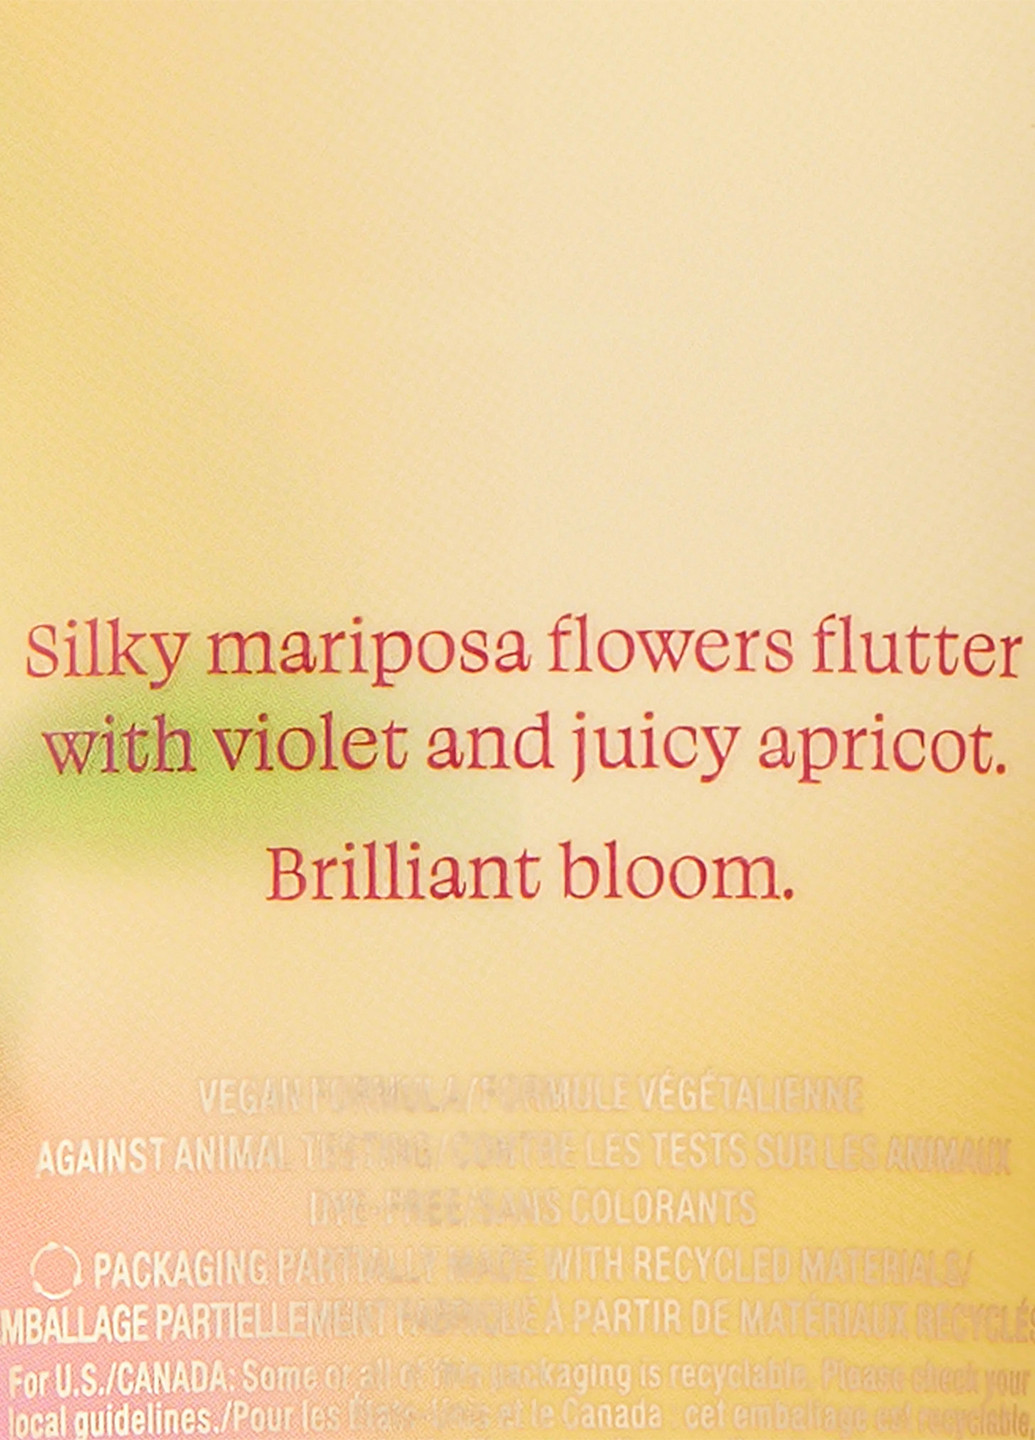 Набір Bright Mariposa Apricot (лосьон, міст), 236 мл/250 мл Victoria's Secret (289787192)